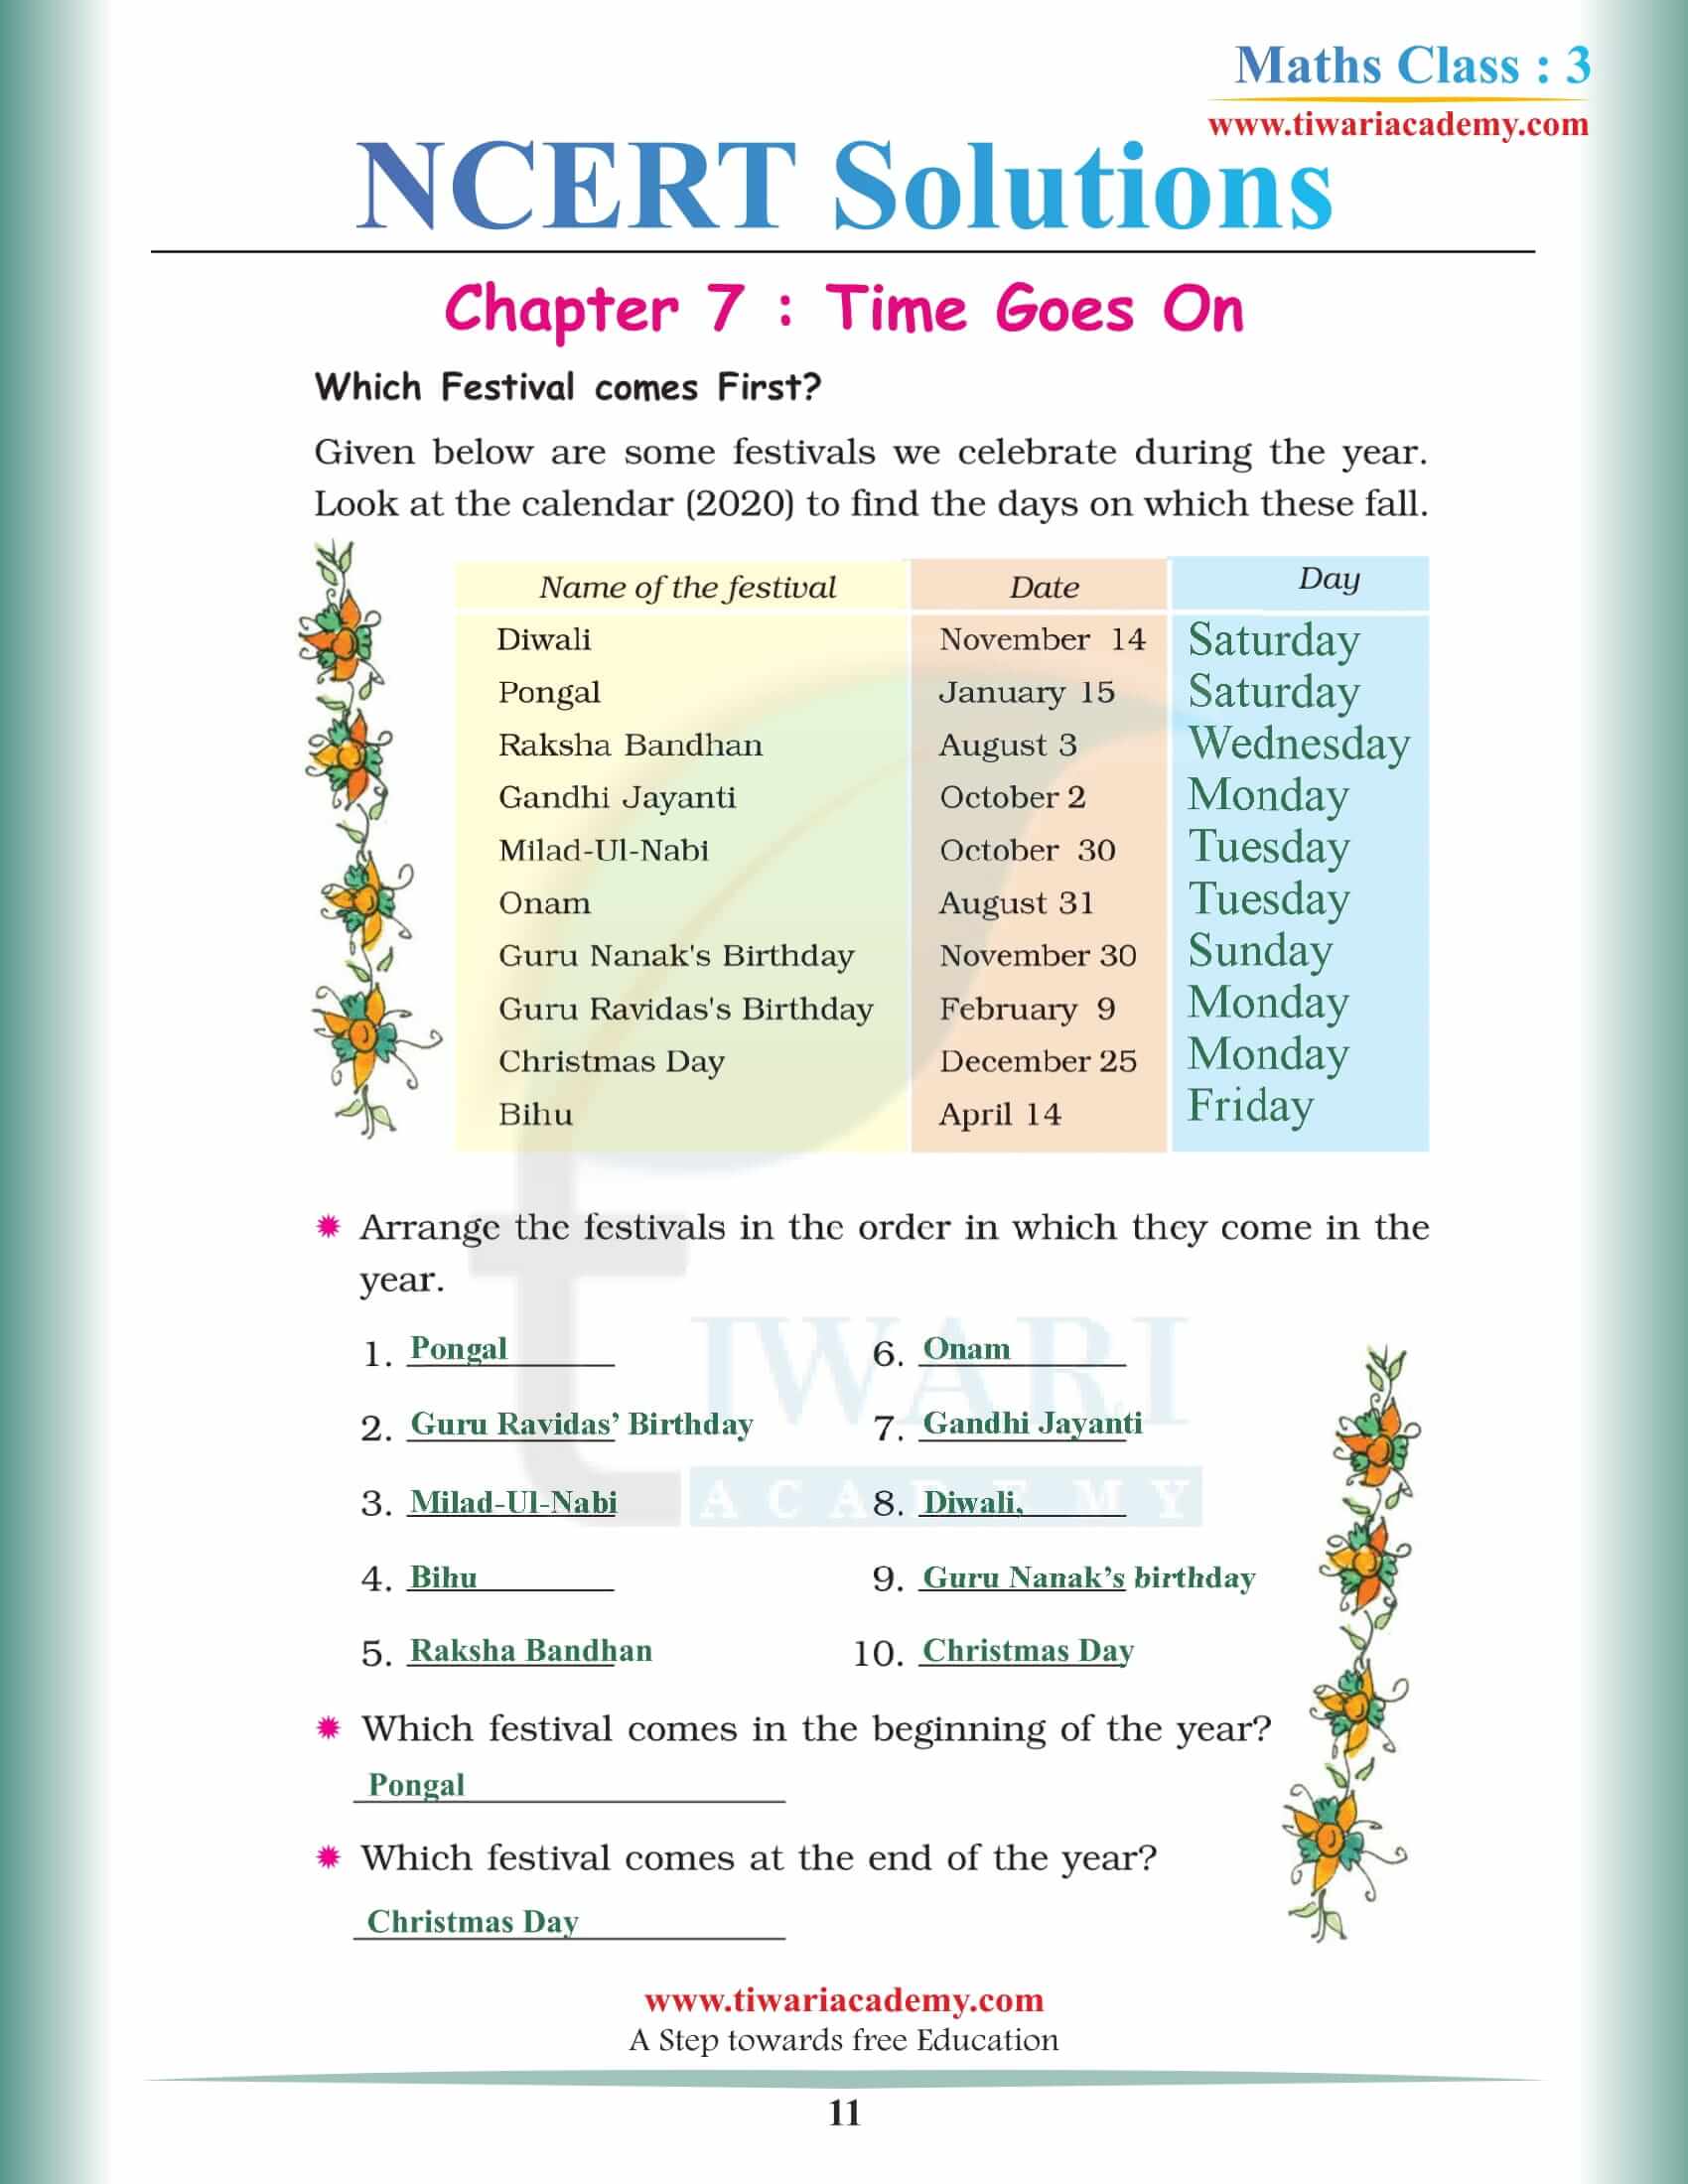 Class 3 Maths NCERT Chapter 7 Solutions in English Medium